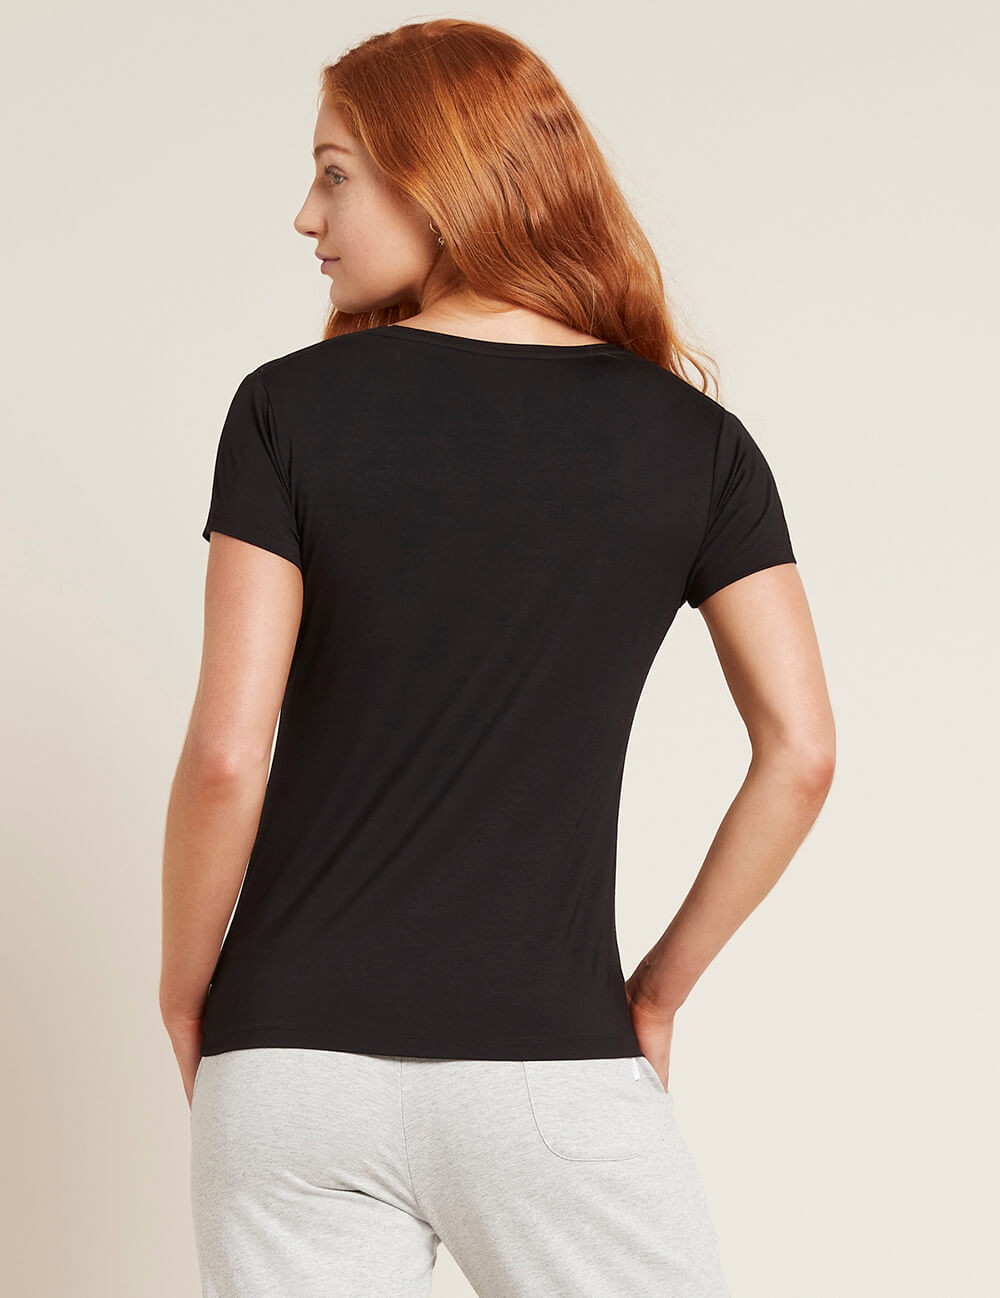 Boody Body EcoWear Women's V-Neck T-Shirt - Bamboo Viscose - Soft